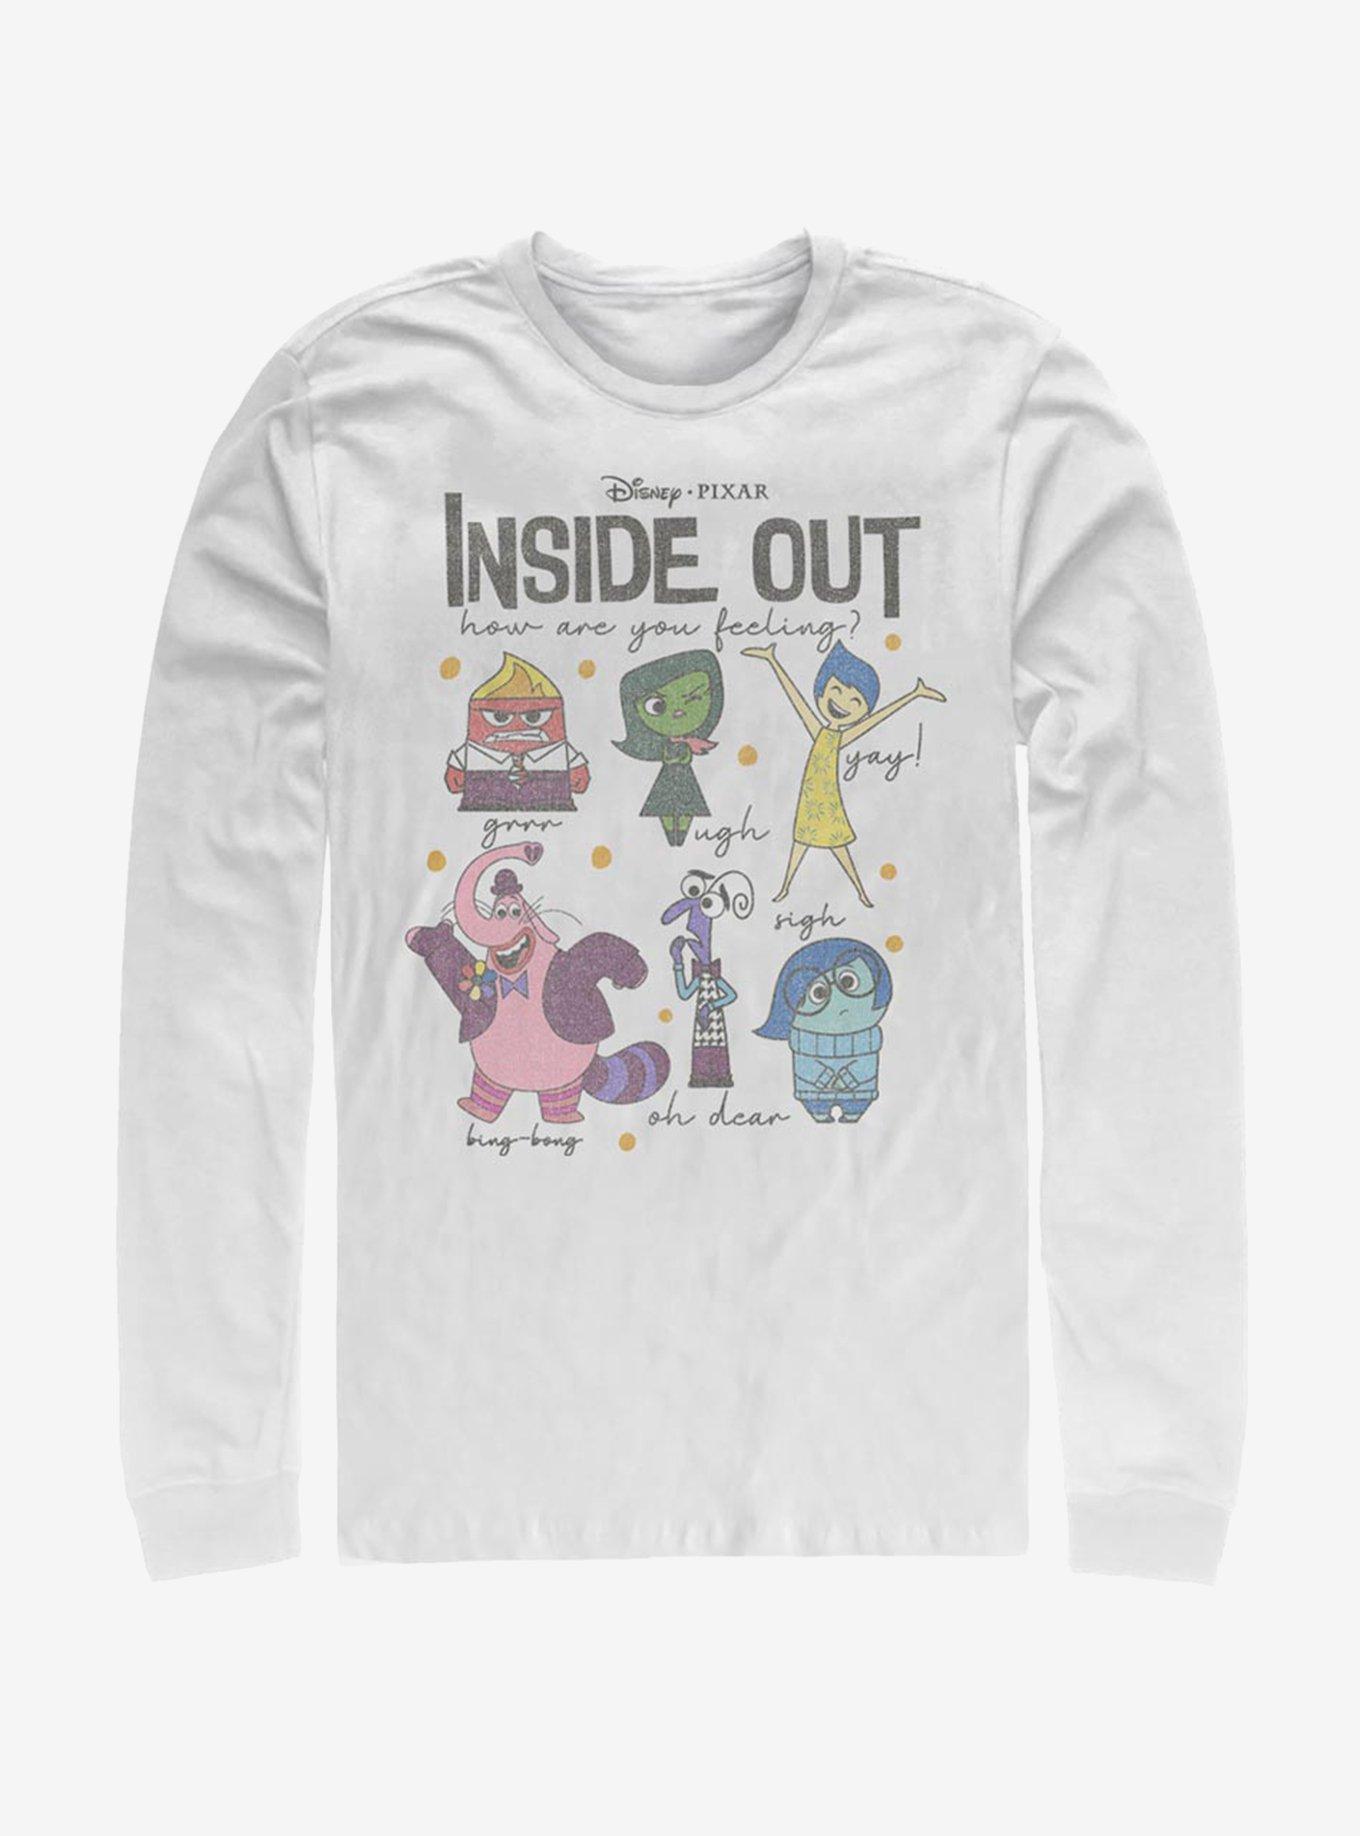 inside out t shirt design